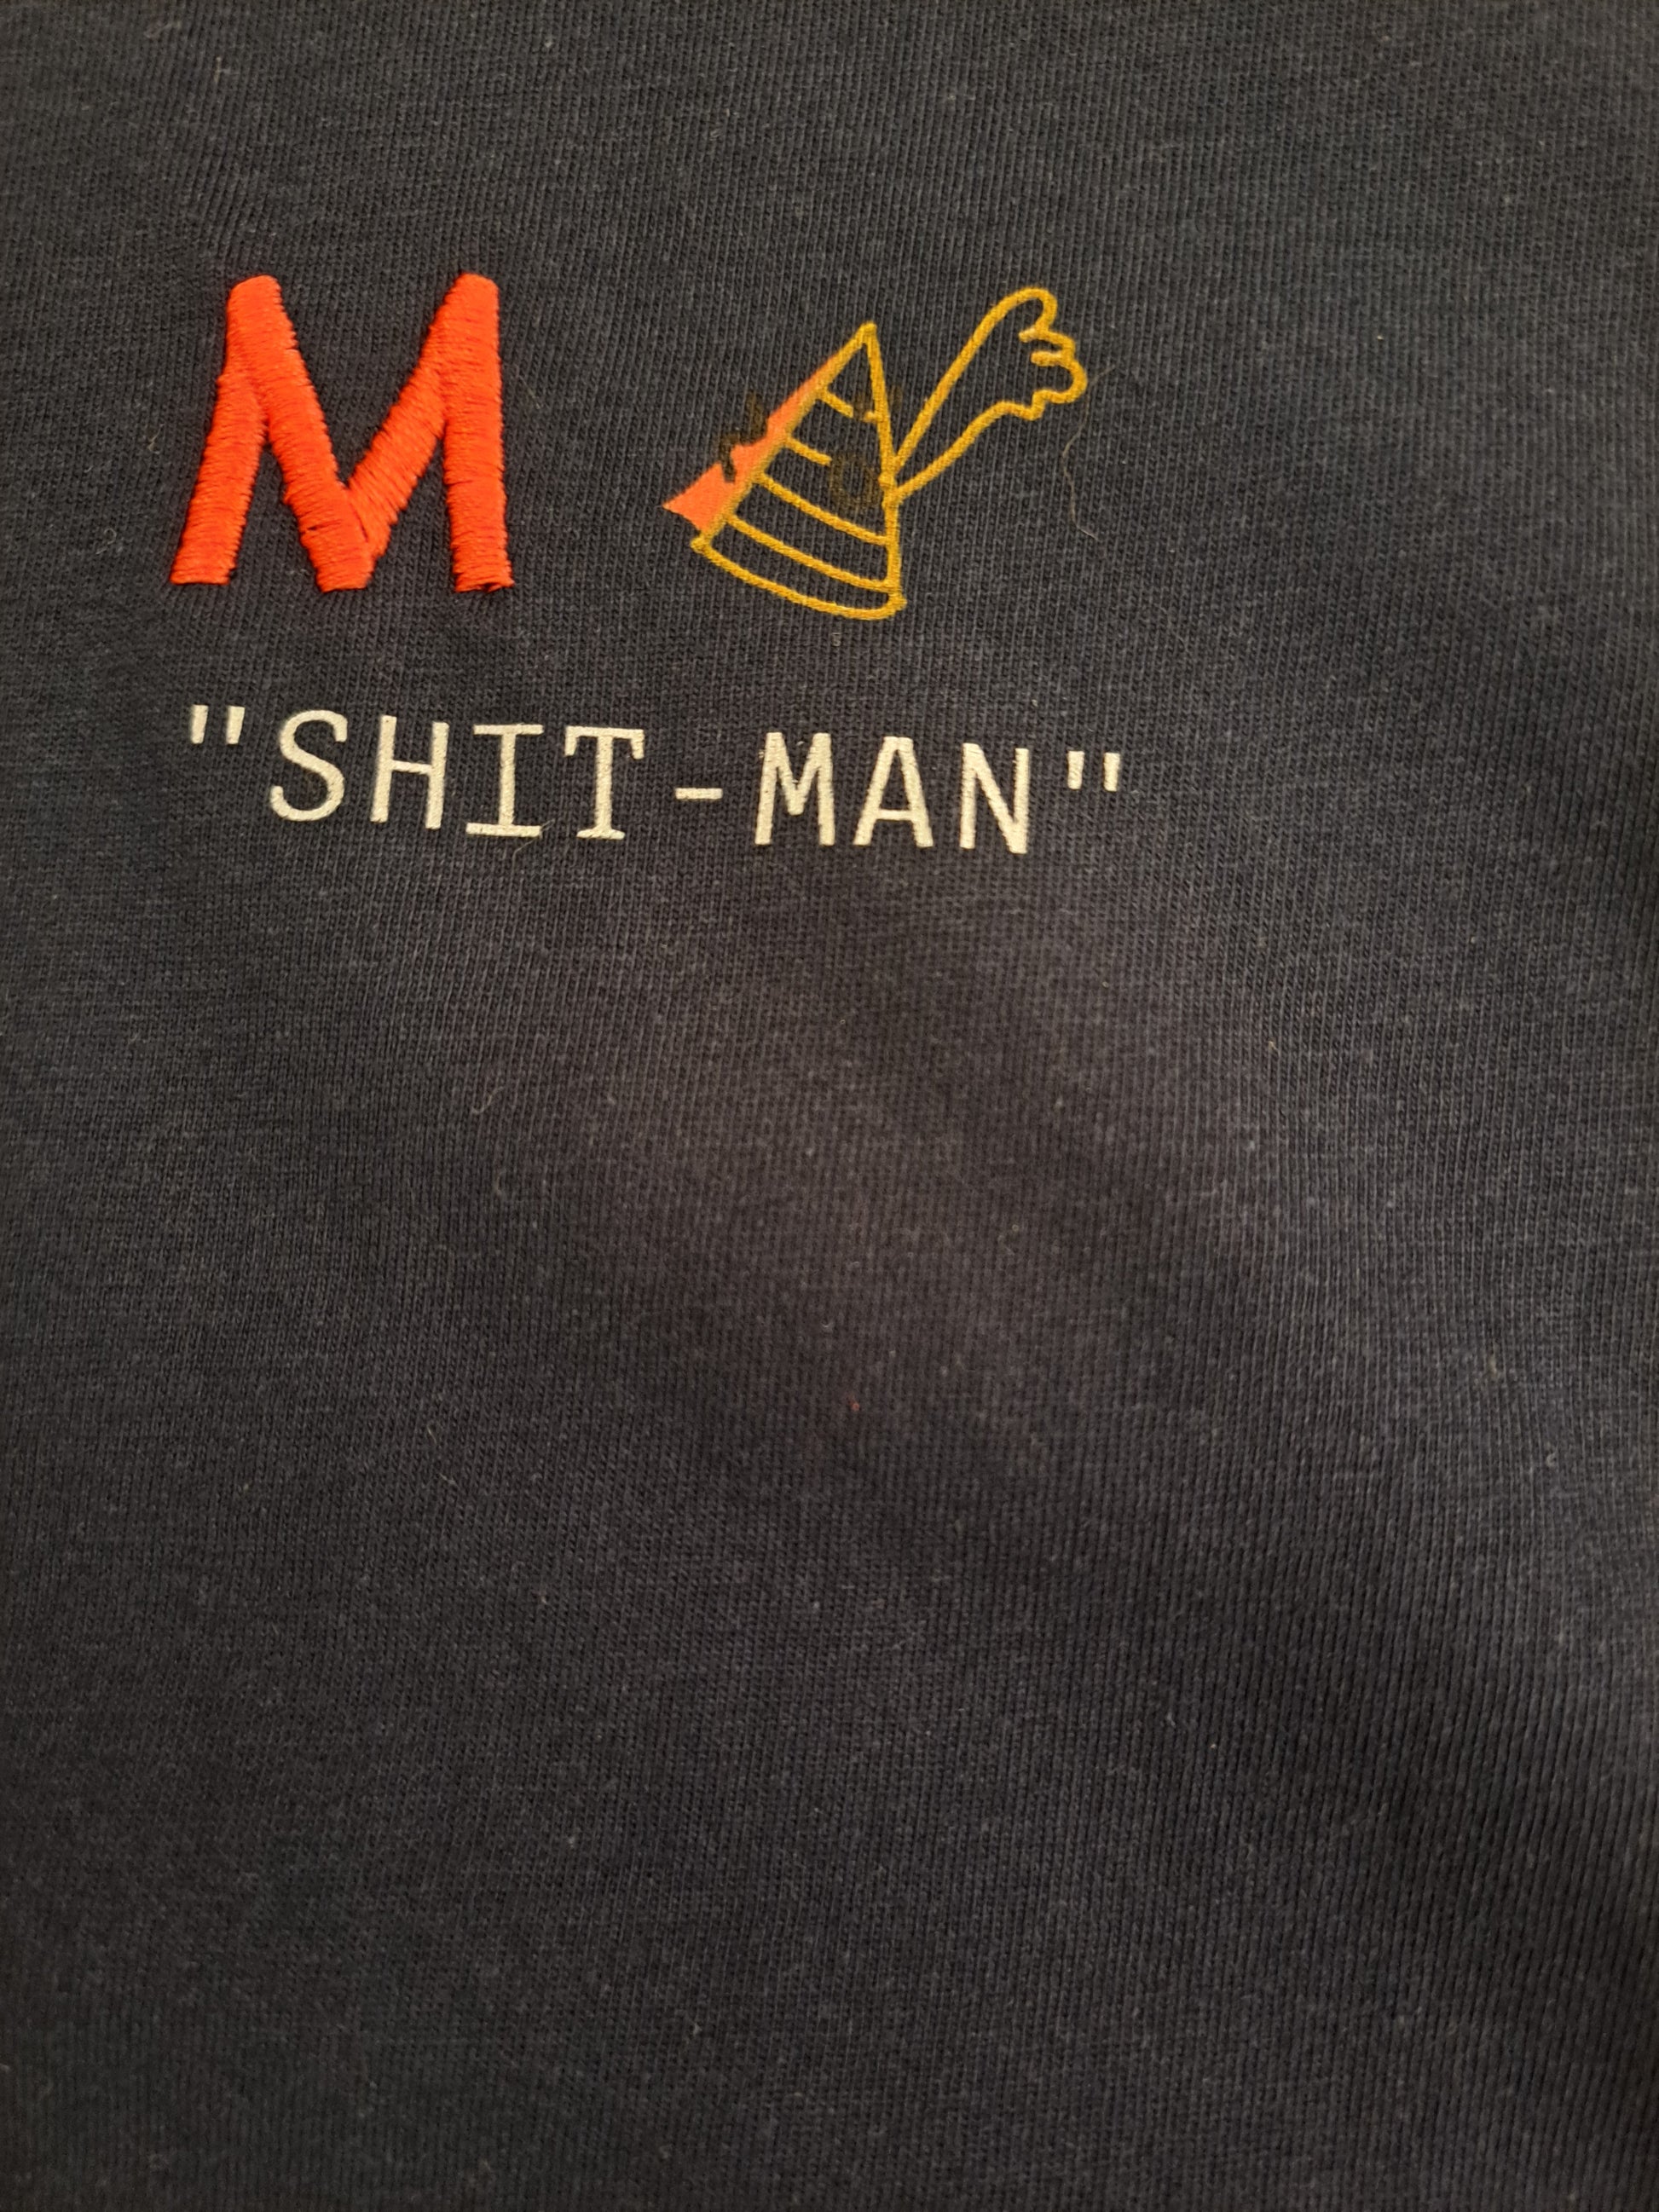 T-shirt "SHIT-MAN" - MANAM-FOSSANO